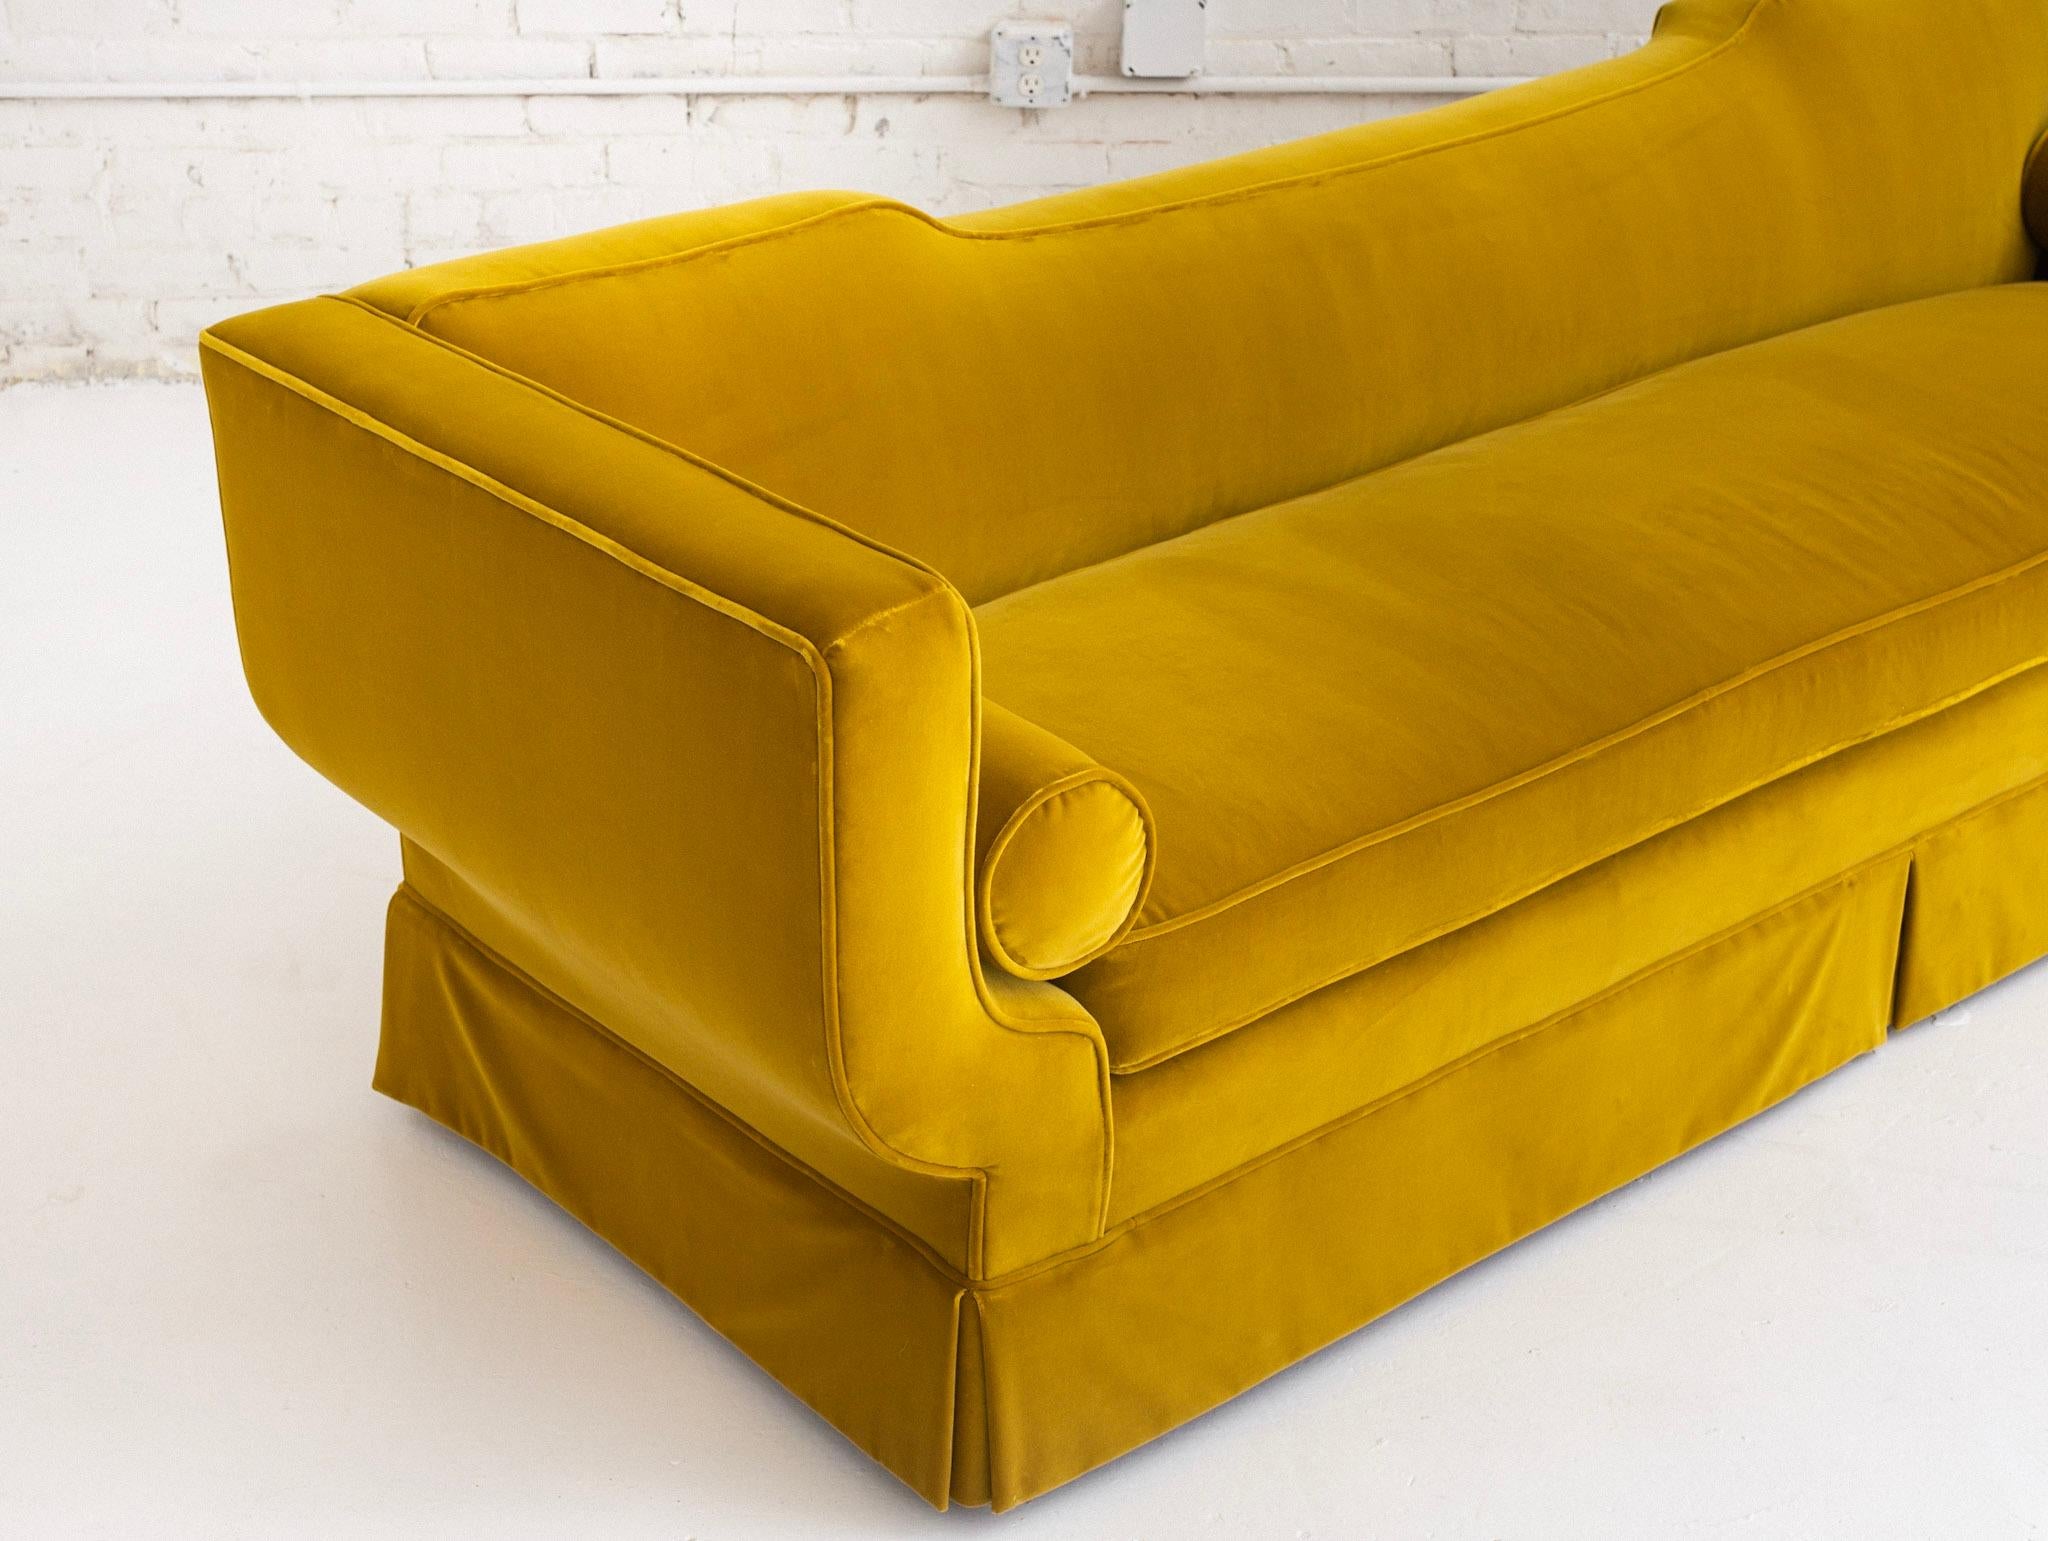 North American Mid Century Velvet Sofa in the Stye of James Mont